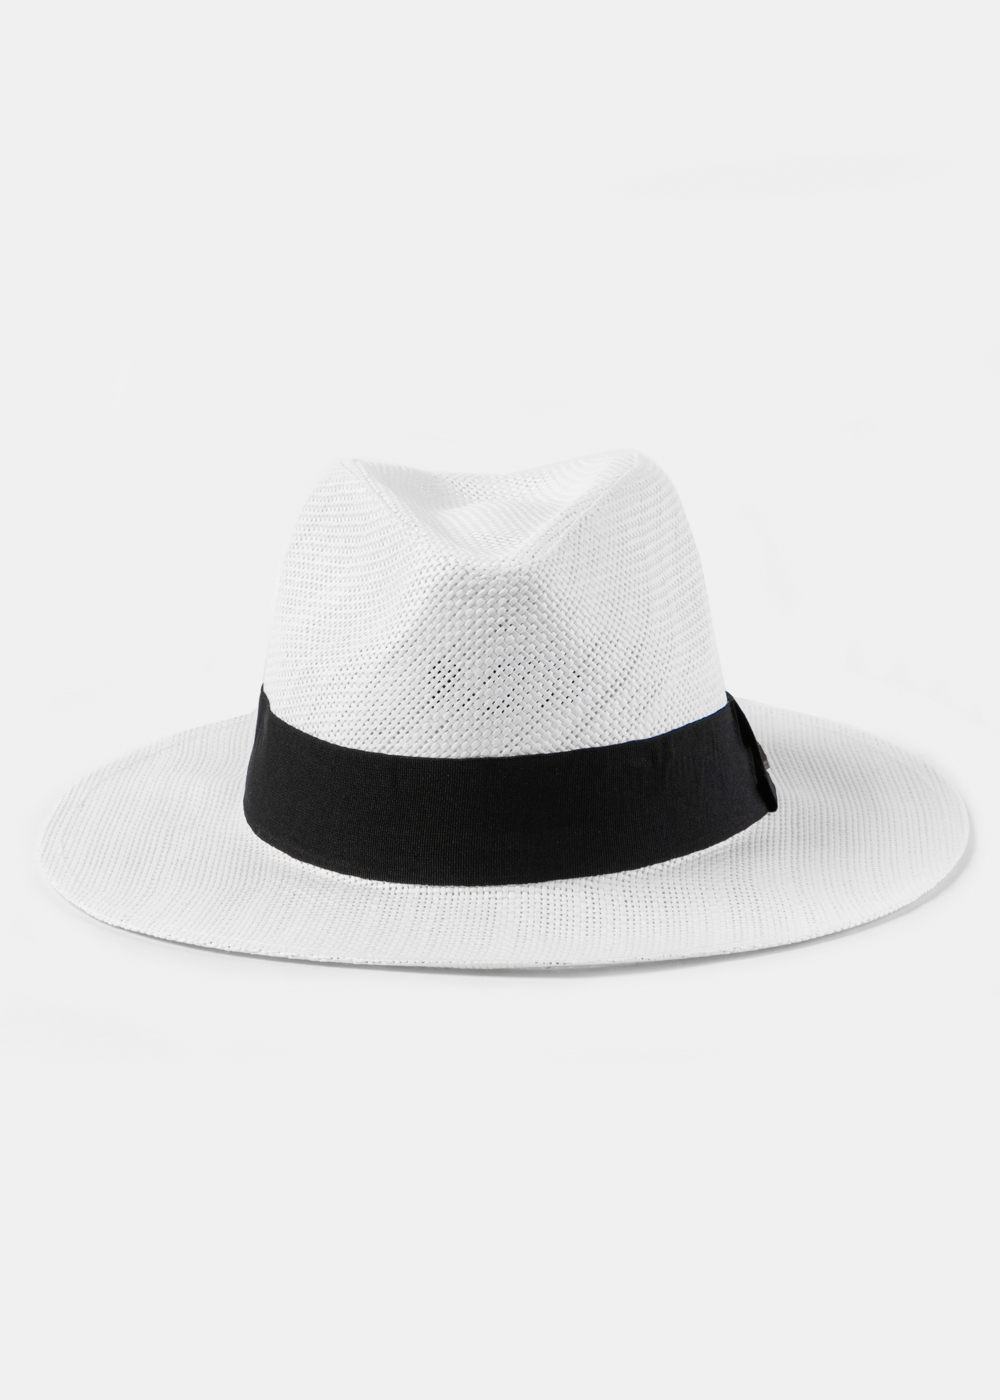 White Panama Style Hat 2